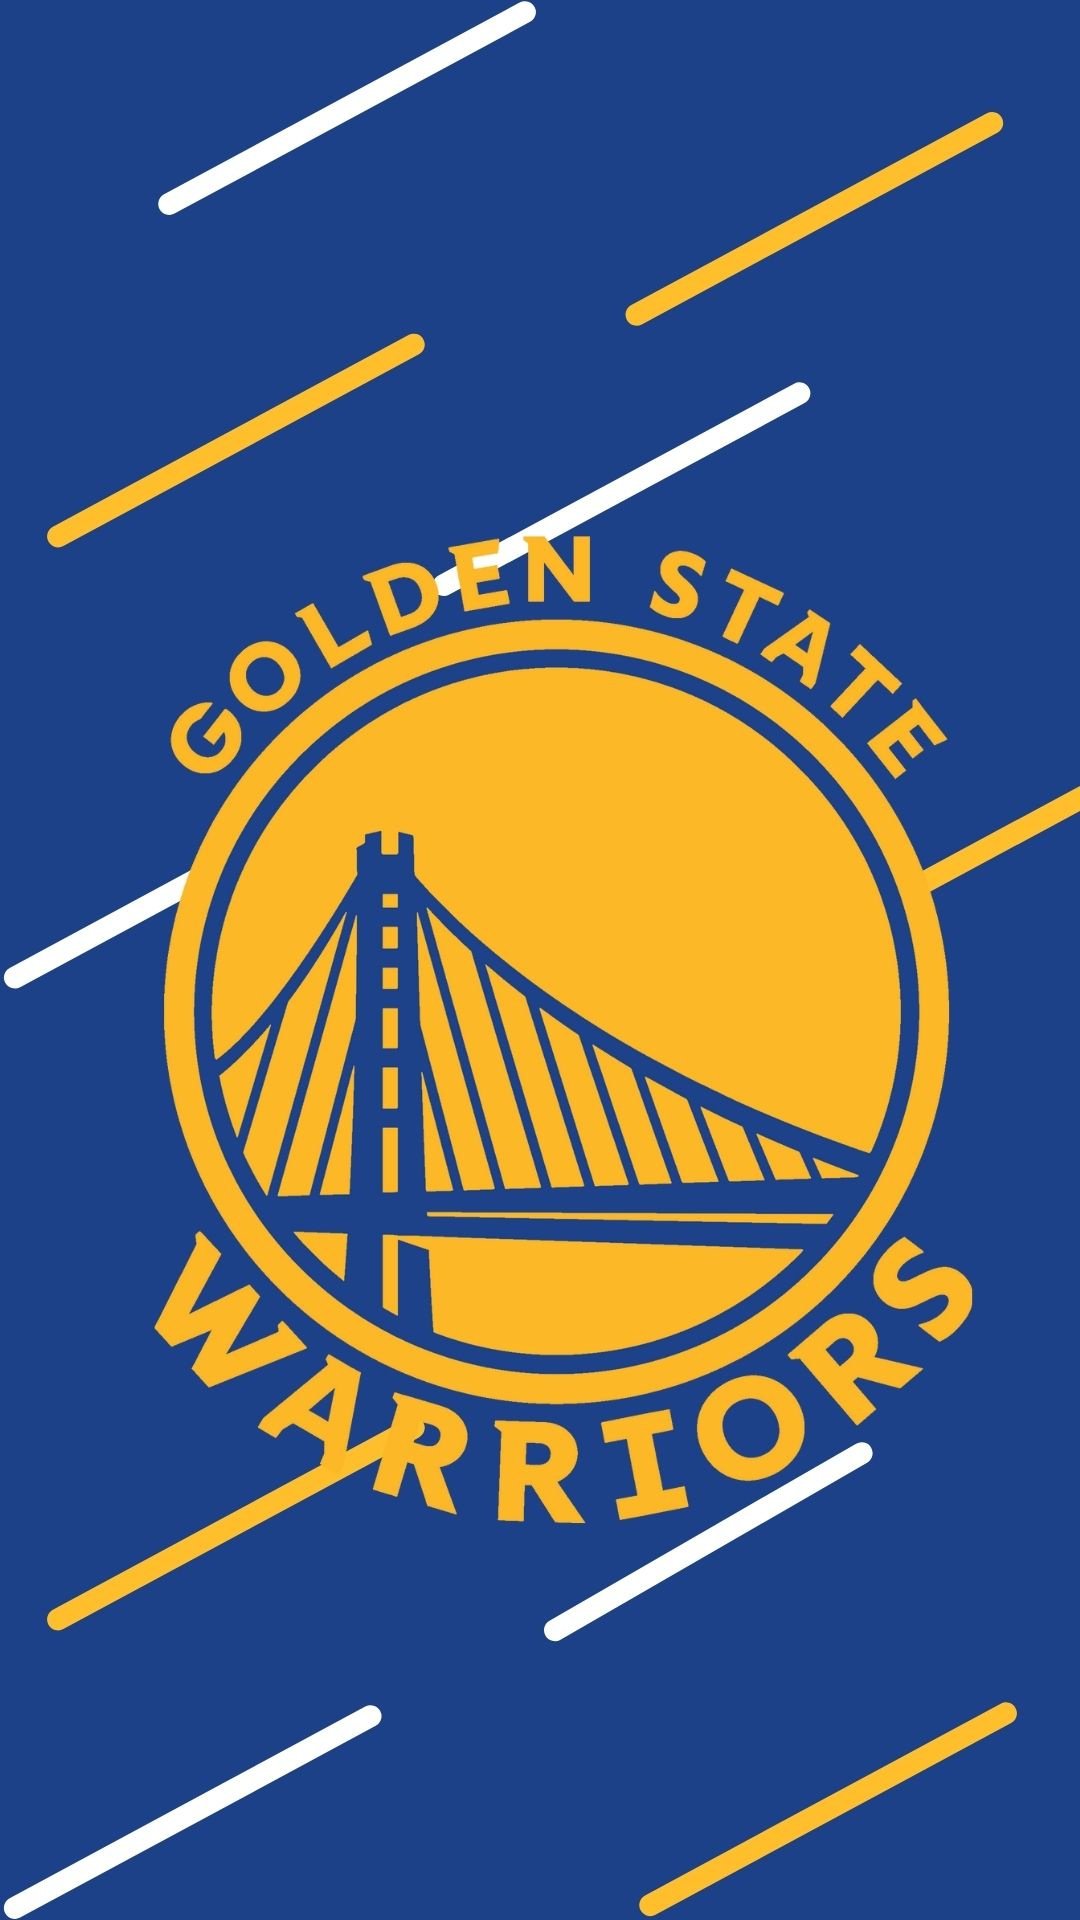 Golden State Warriors added a new  Golden State Warriors